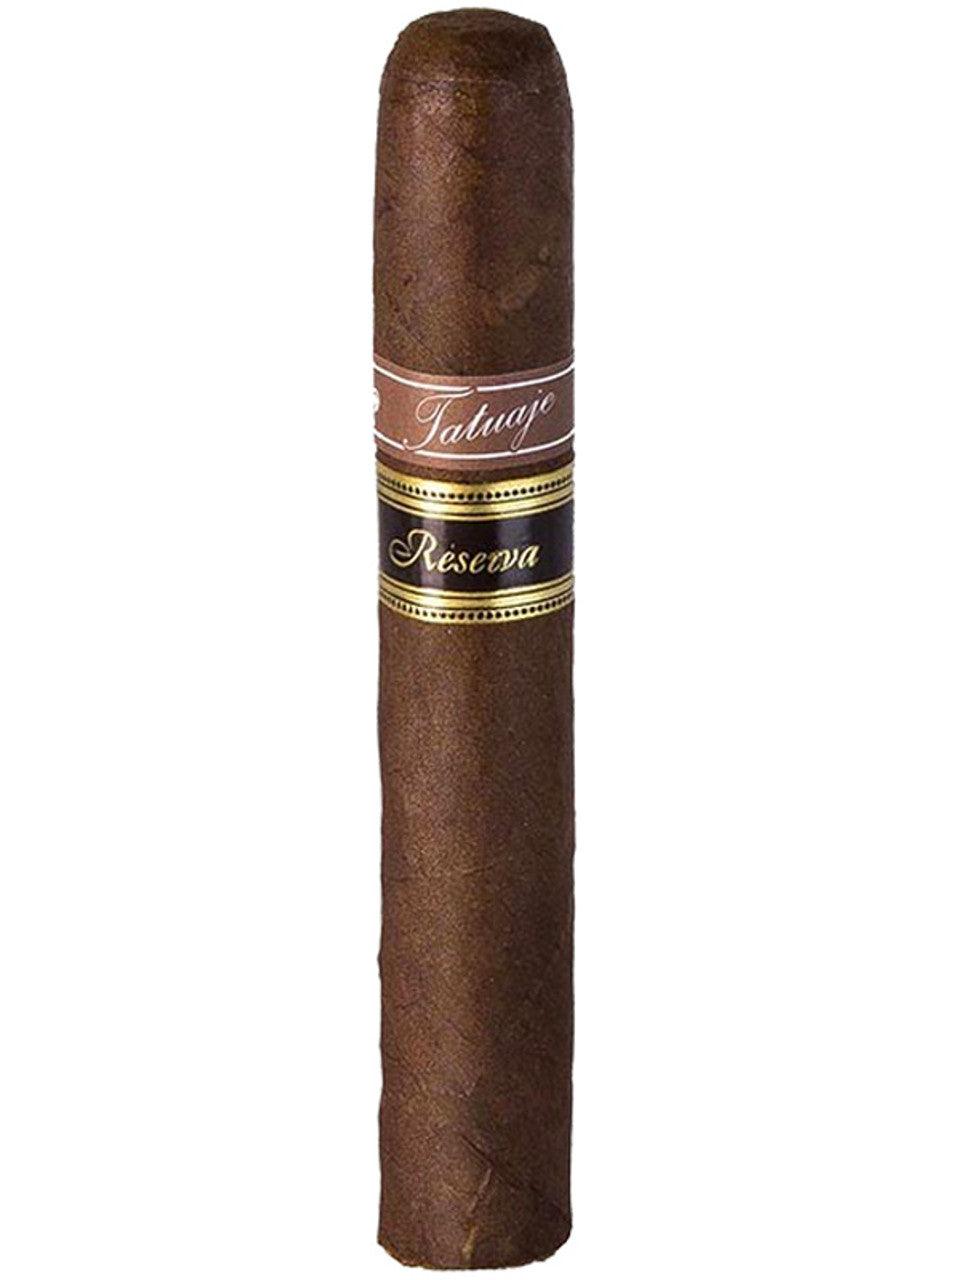 Tatuaje Cigar | Reserva J21 | Box of 25 - hk.cohcigars